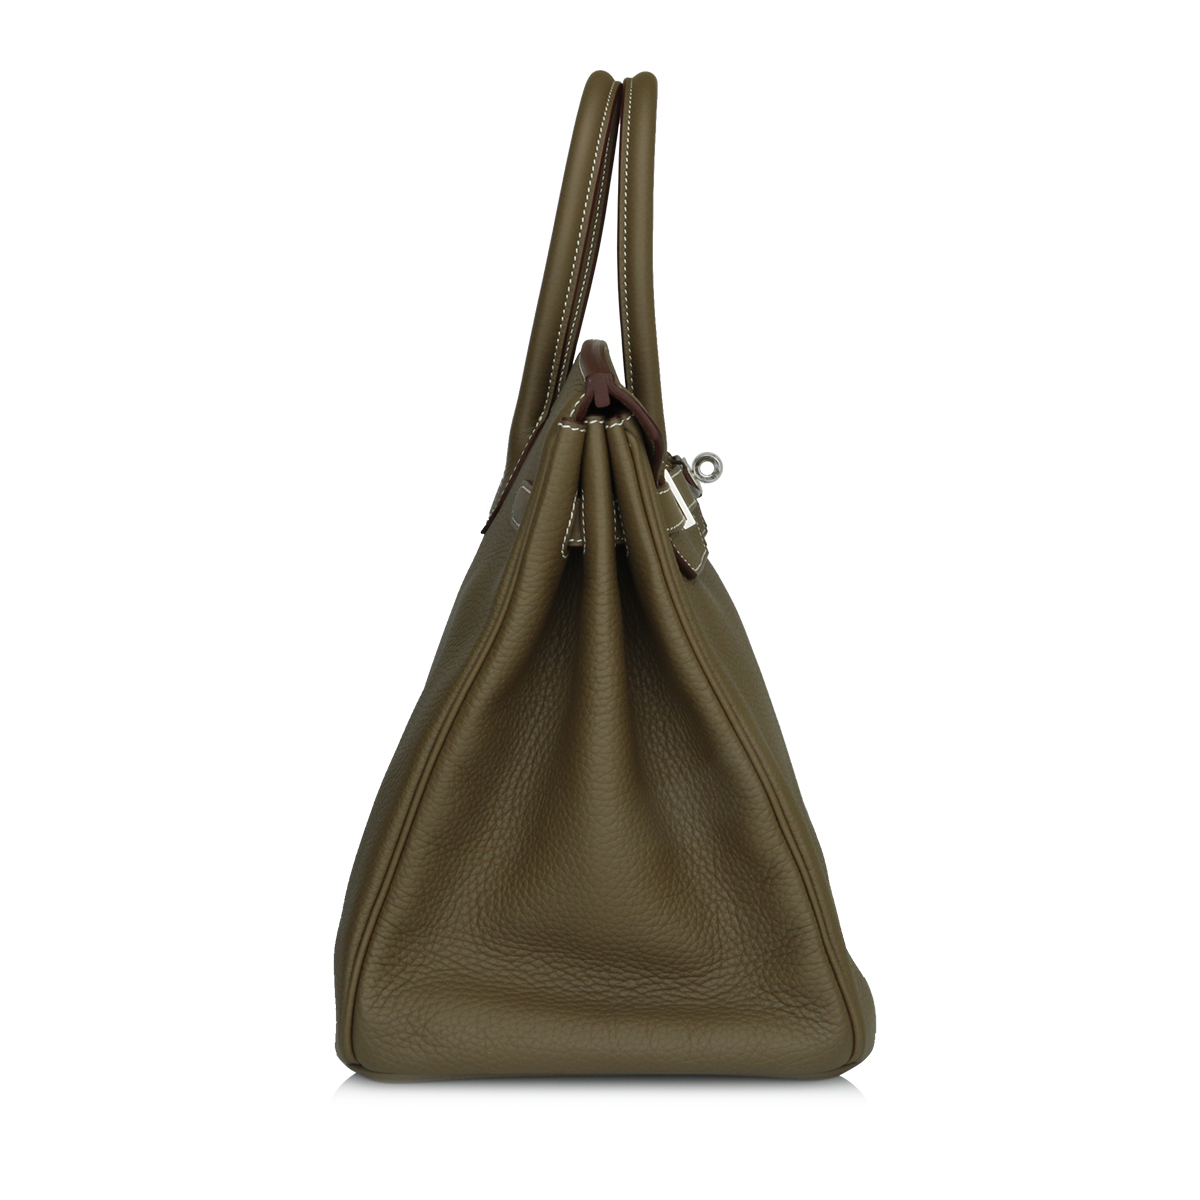 Hermès 35cm Anemone Togo leather Birkin bag sold at auction on 10th July